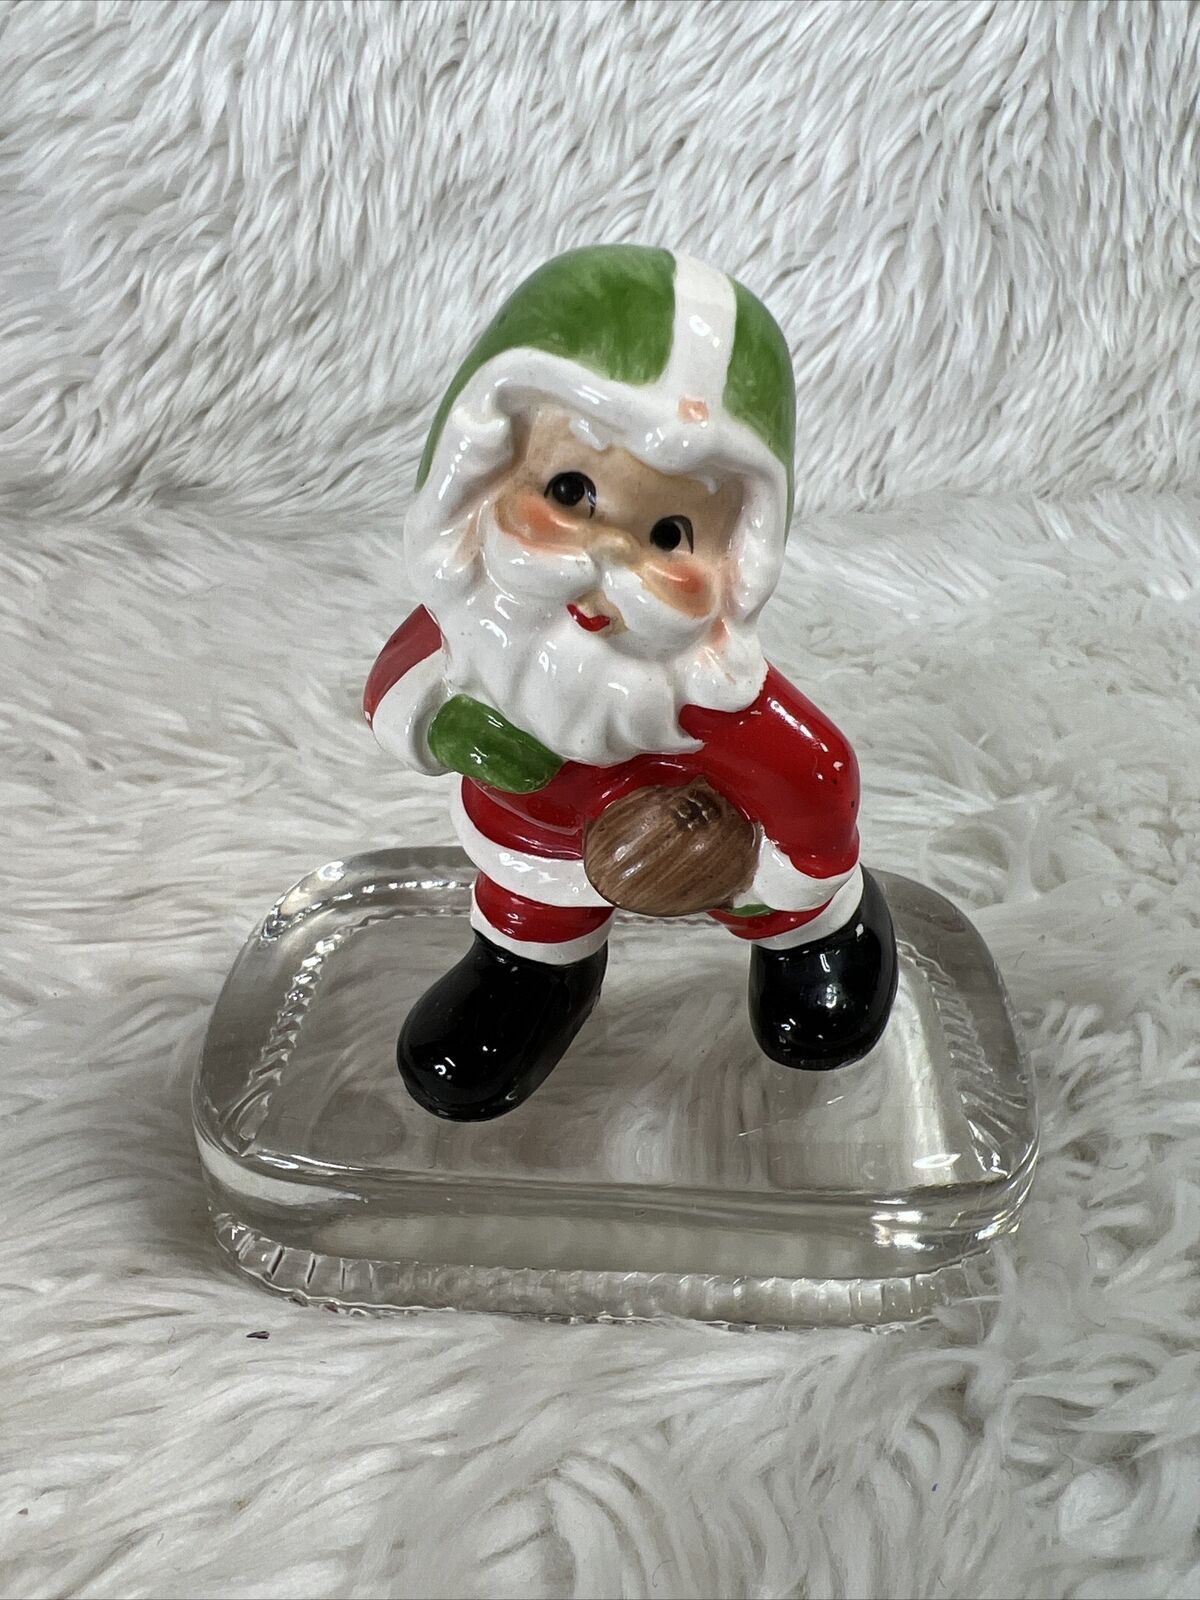 Vintage 3.5” Christmas Ceramic Santa Claus Figure Playing Football